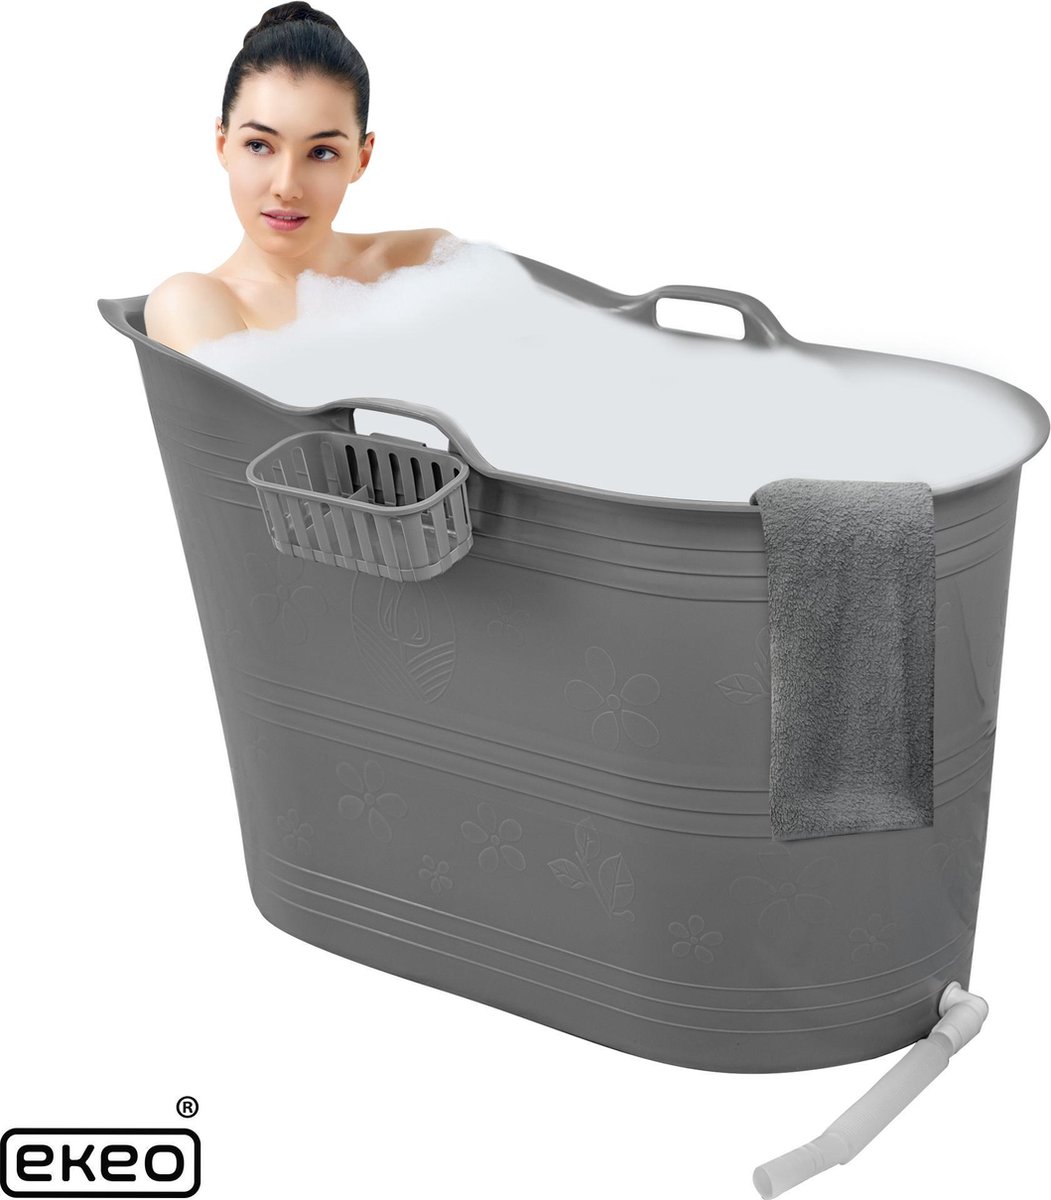 EKEO Zitbad - 210L - Mobiele badkuip - Bath Bucket - Ijsbad- Tuinbad - Grijs